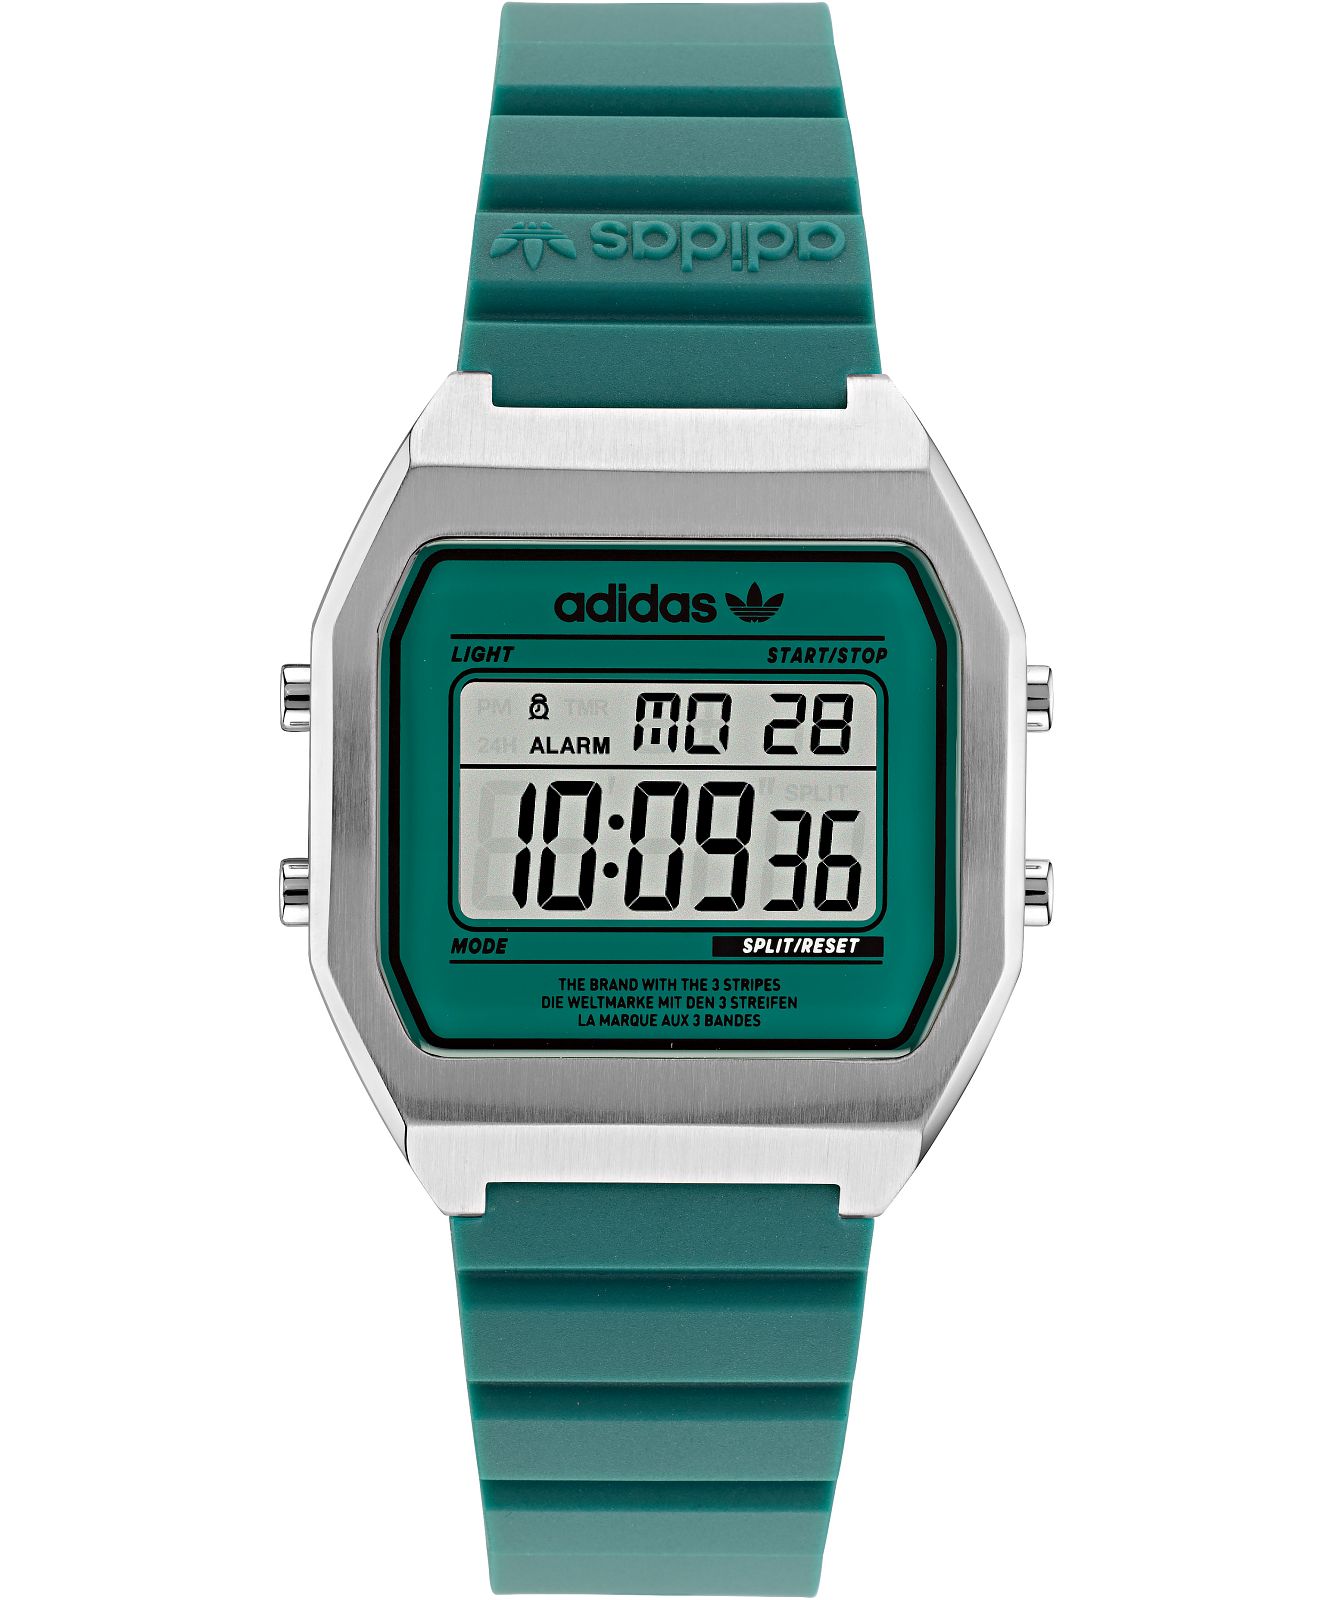 Adidas Originals AOST22076 - Street Digital Two Watch •